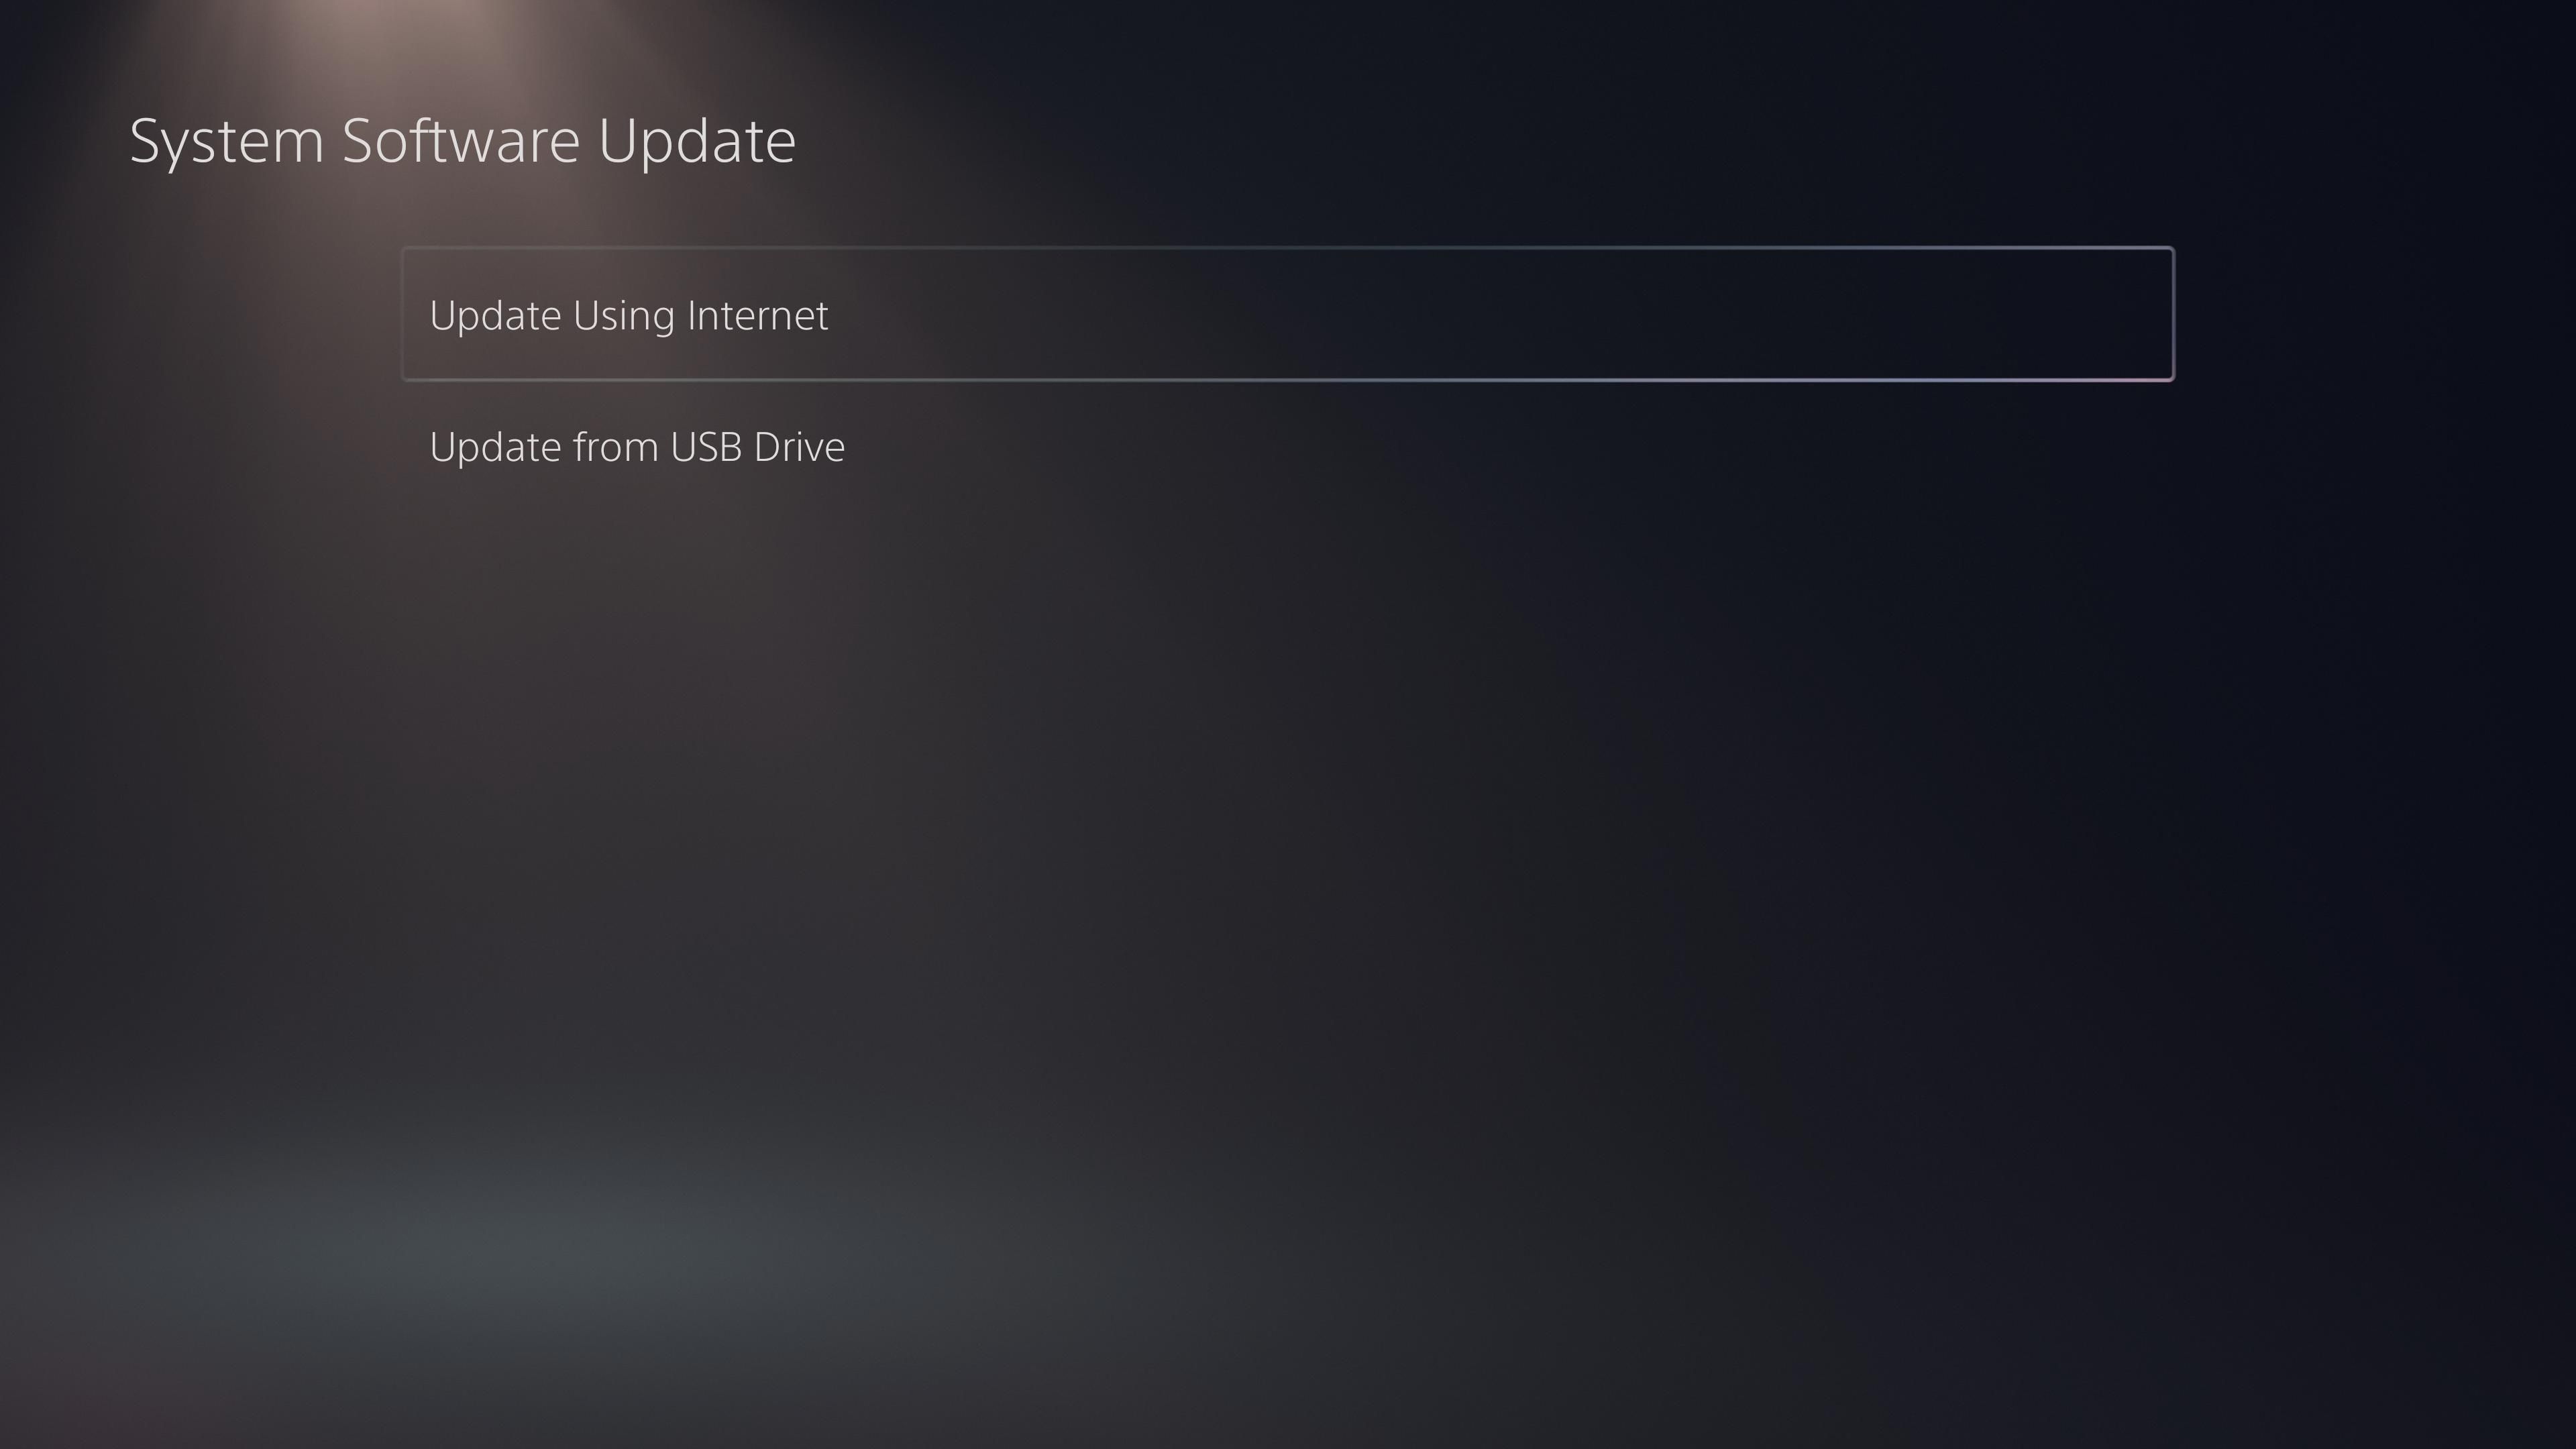 PS5 Update Using Internet